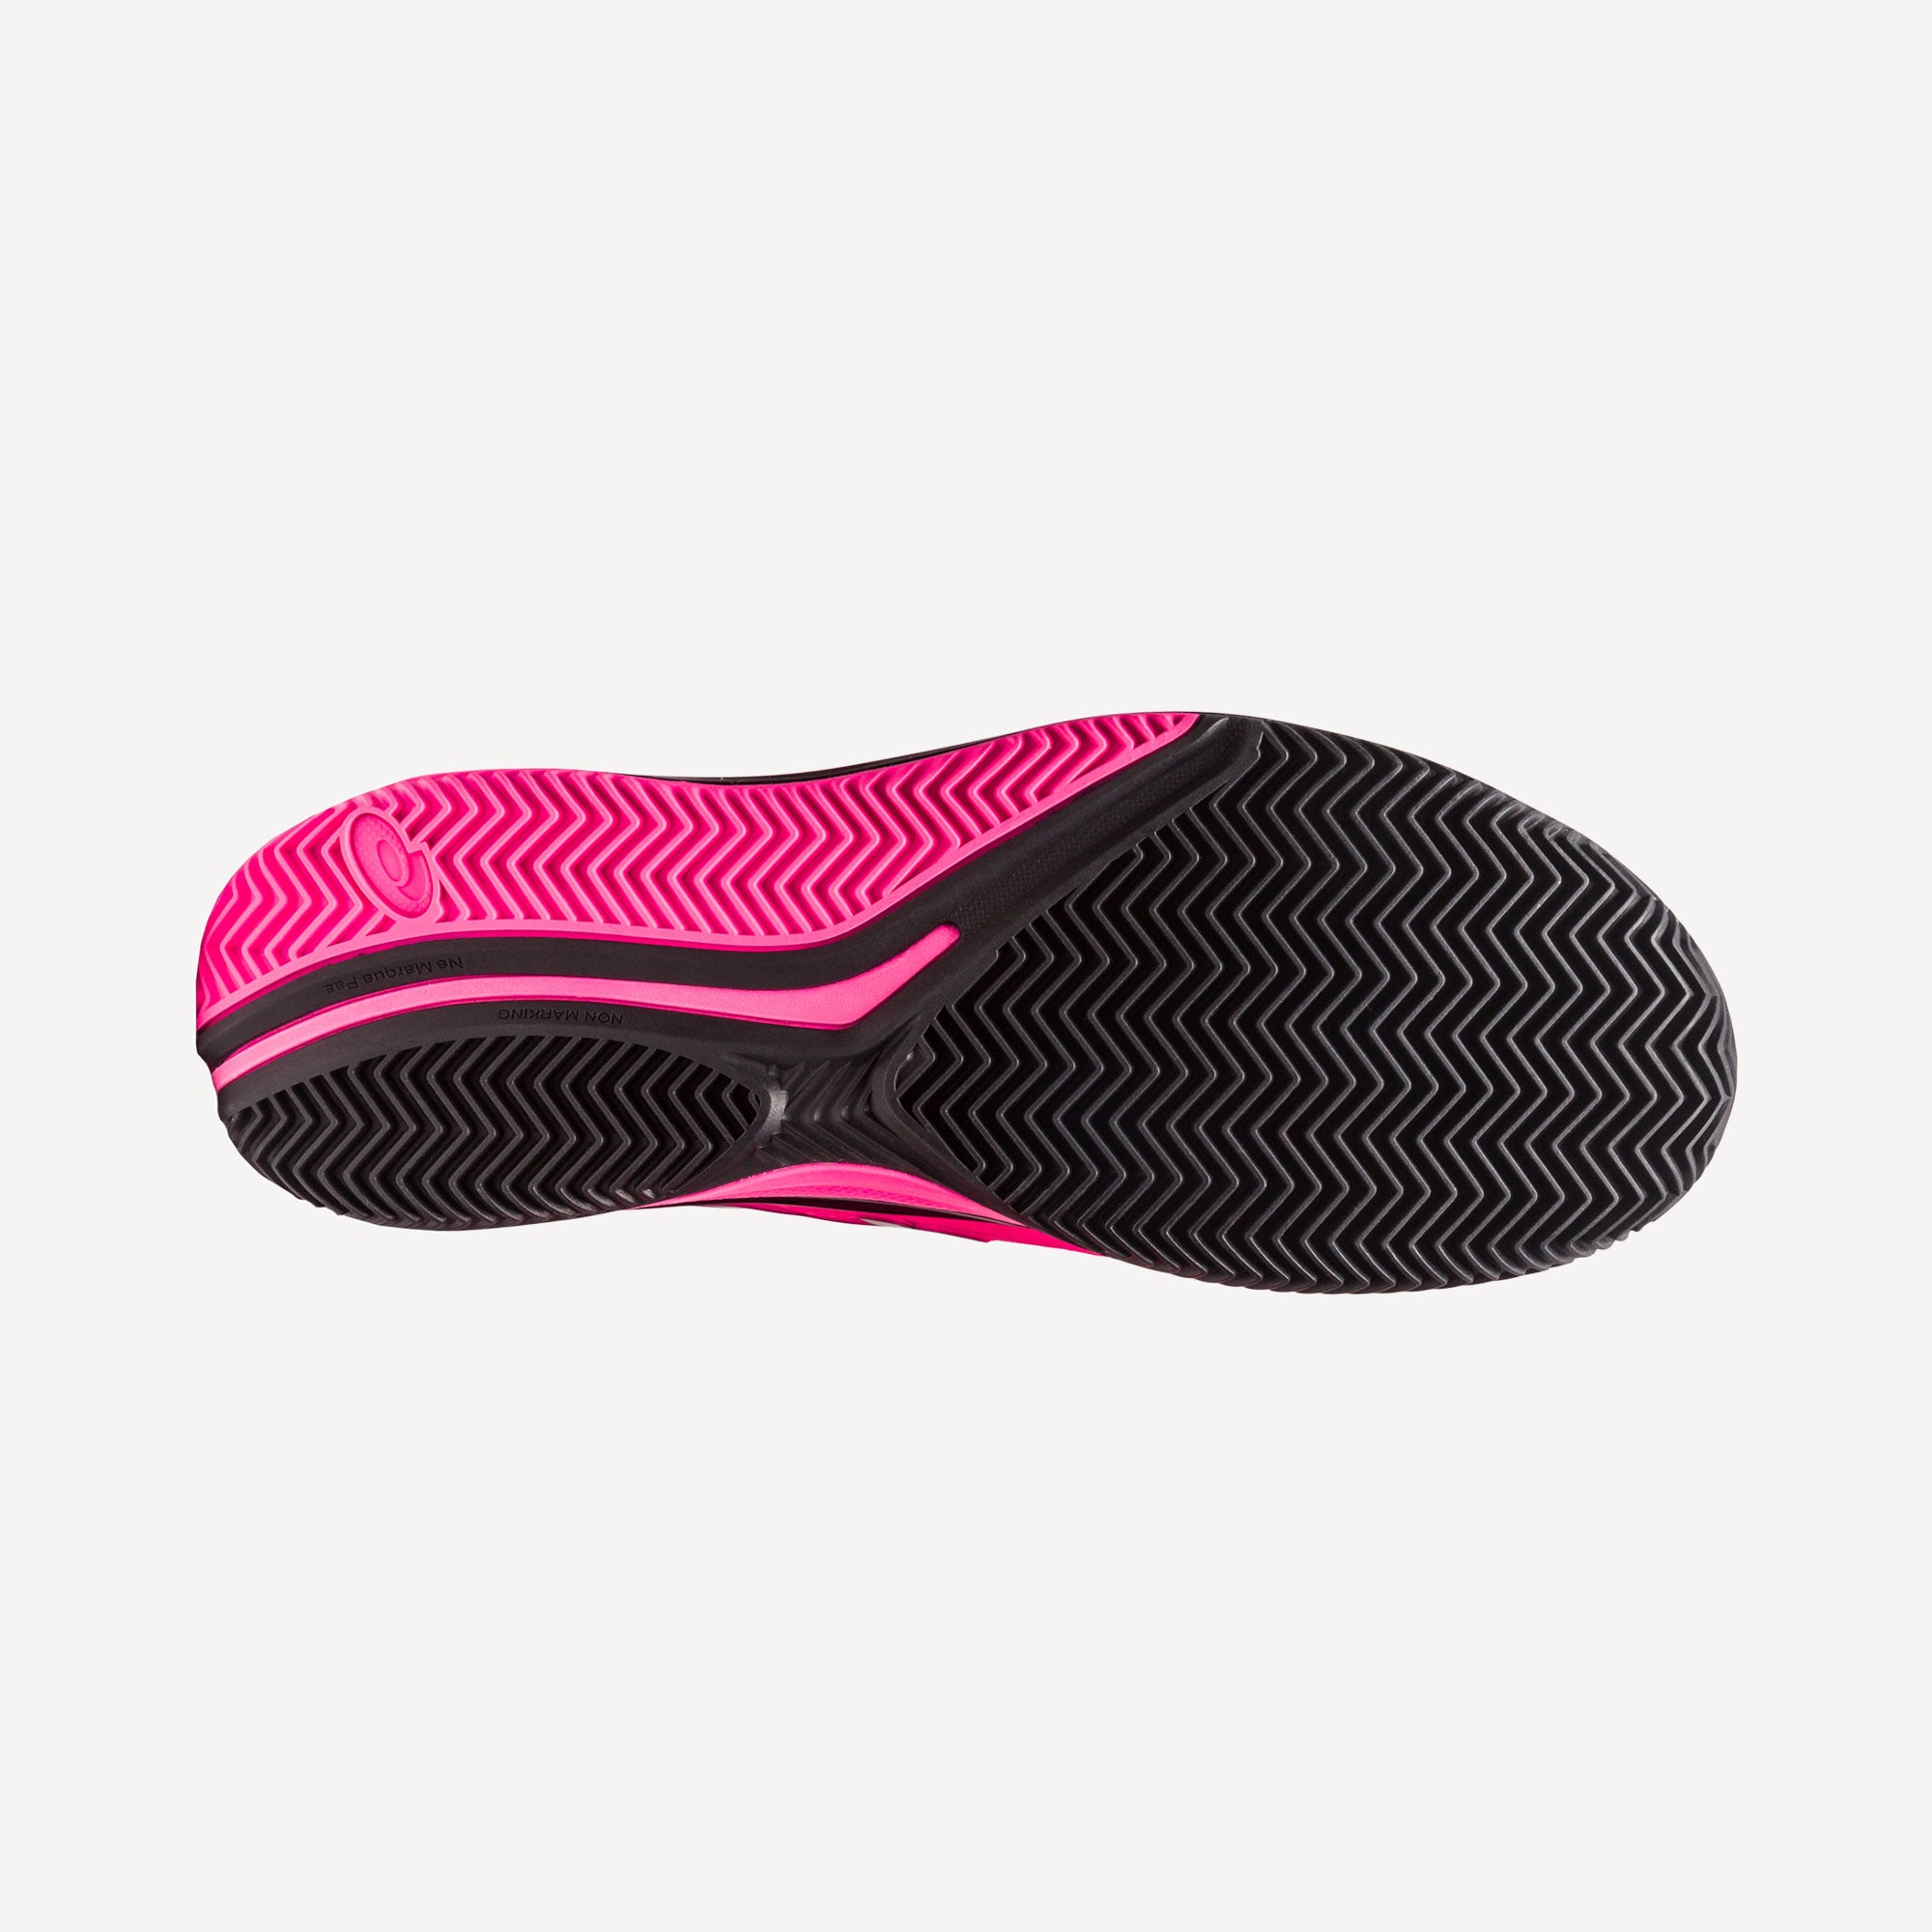 ASICS Gel-Resolution 9 Men's Clay Court Tennis Shoes Pink (2)